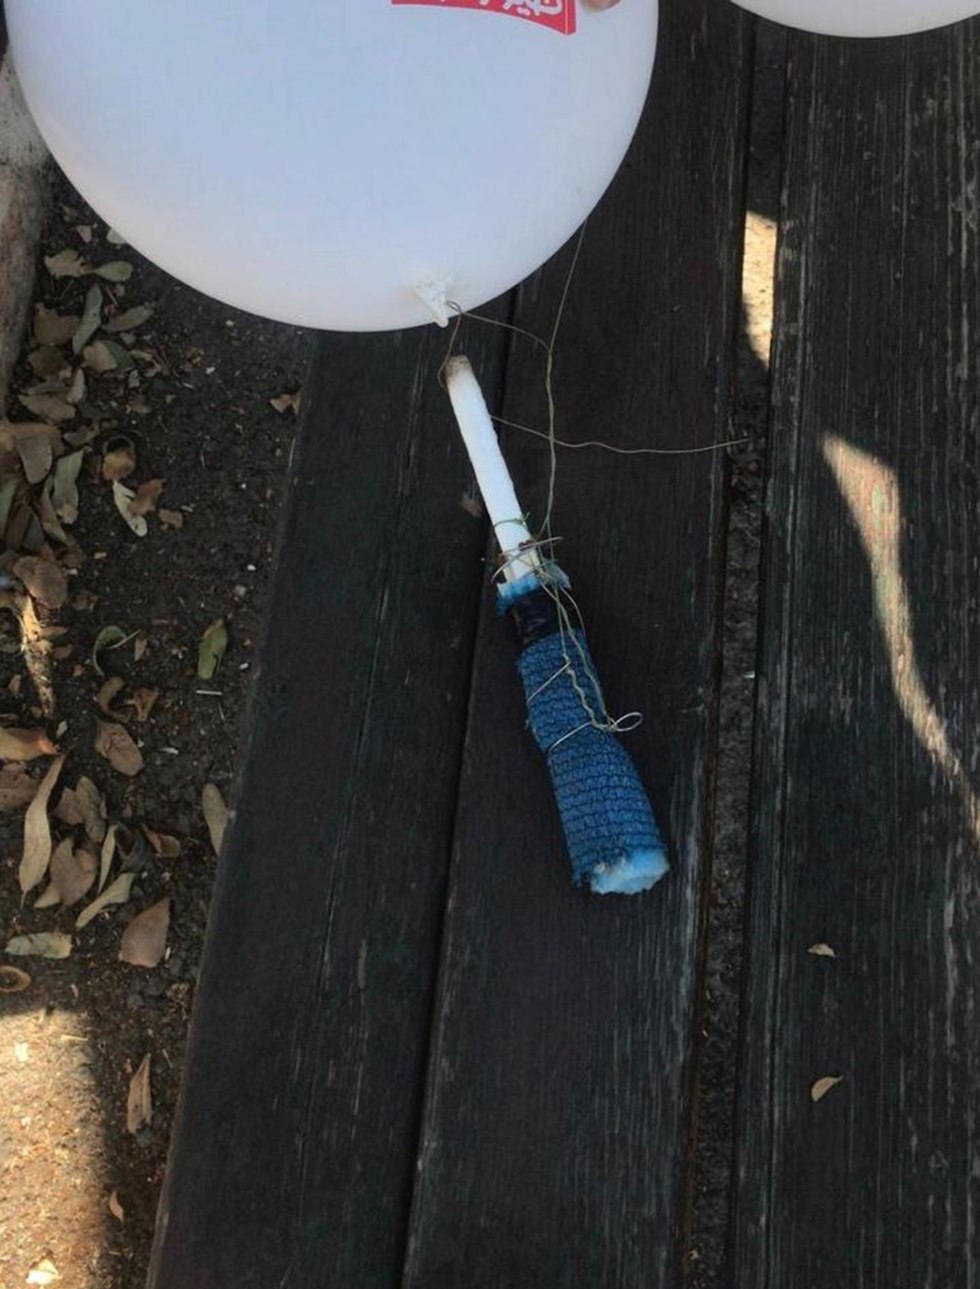 A balloon found in Jerusalem (Photo: Police Spokesman)